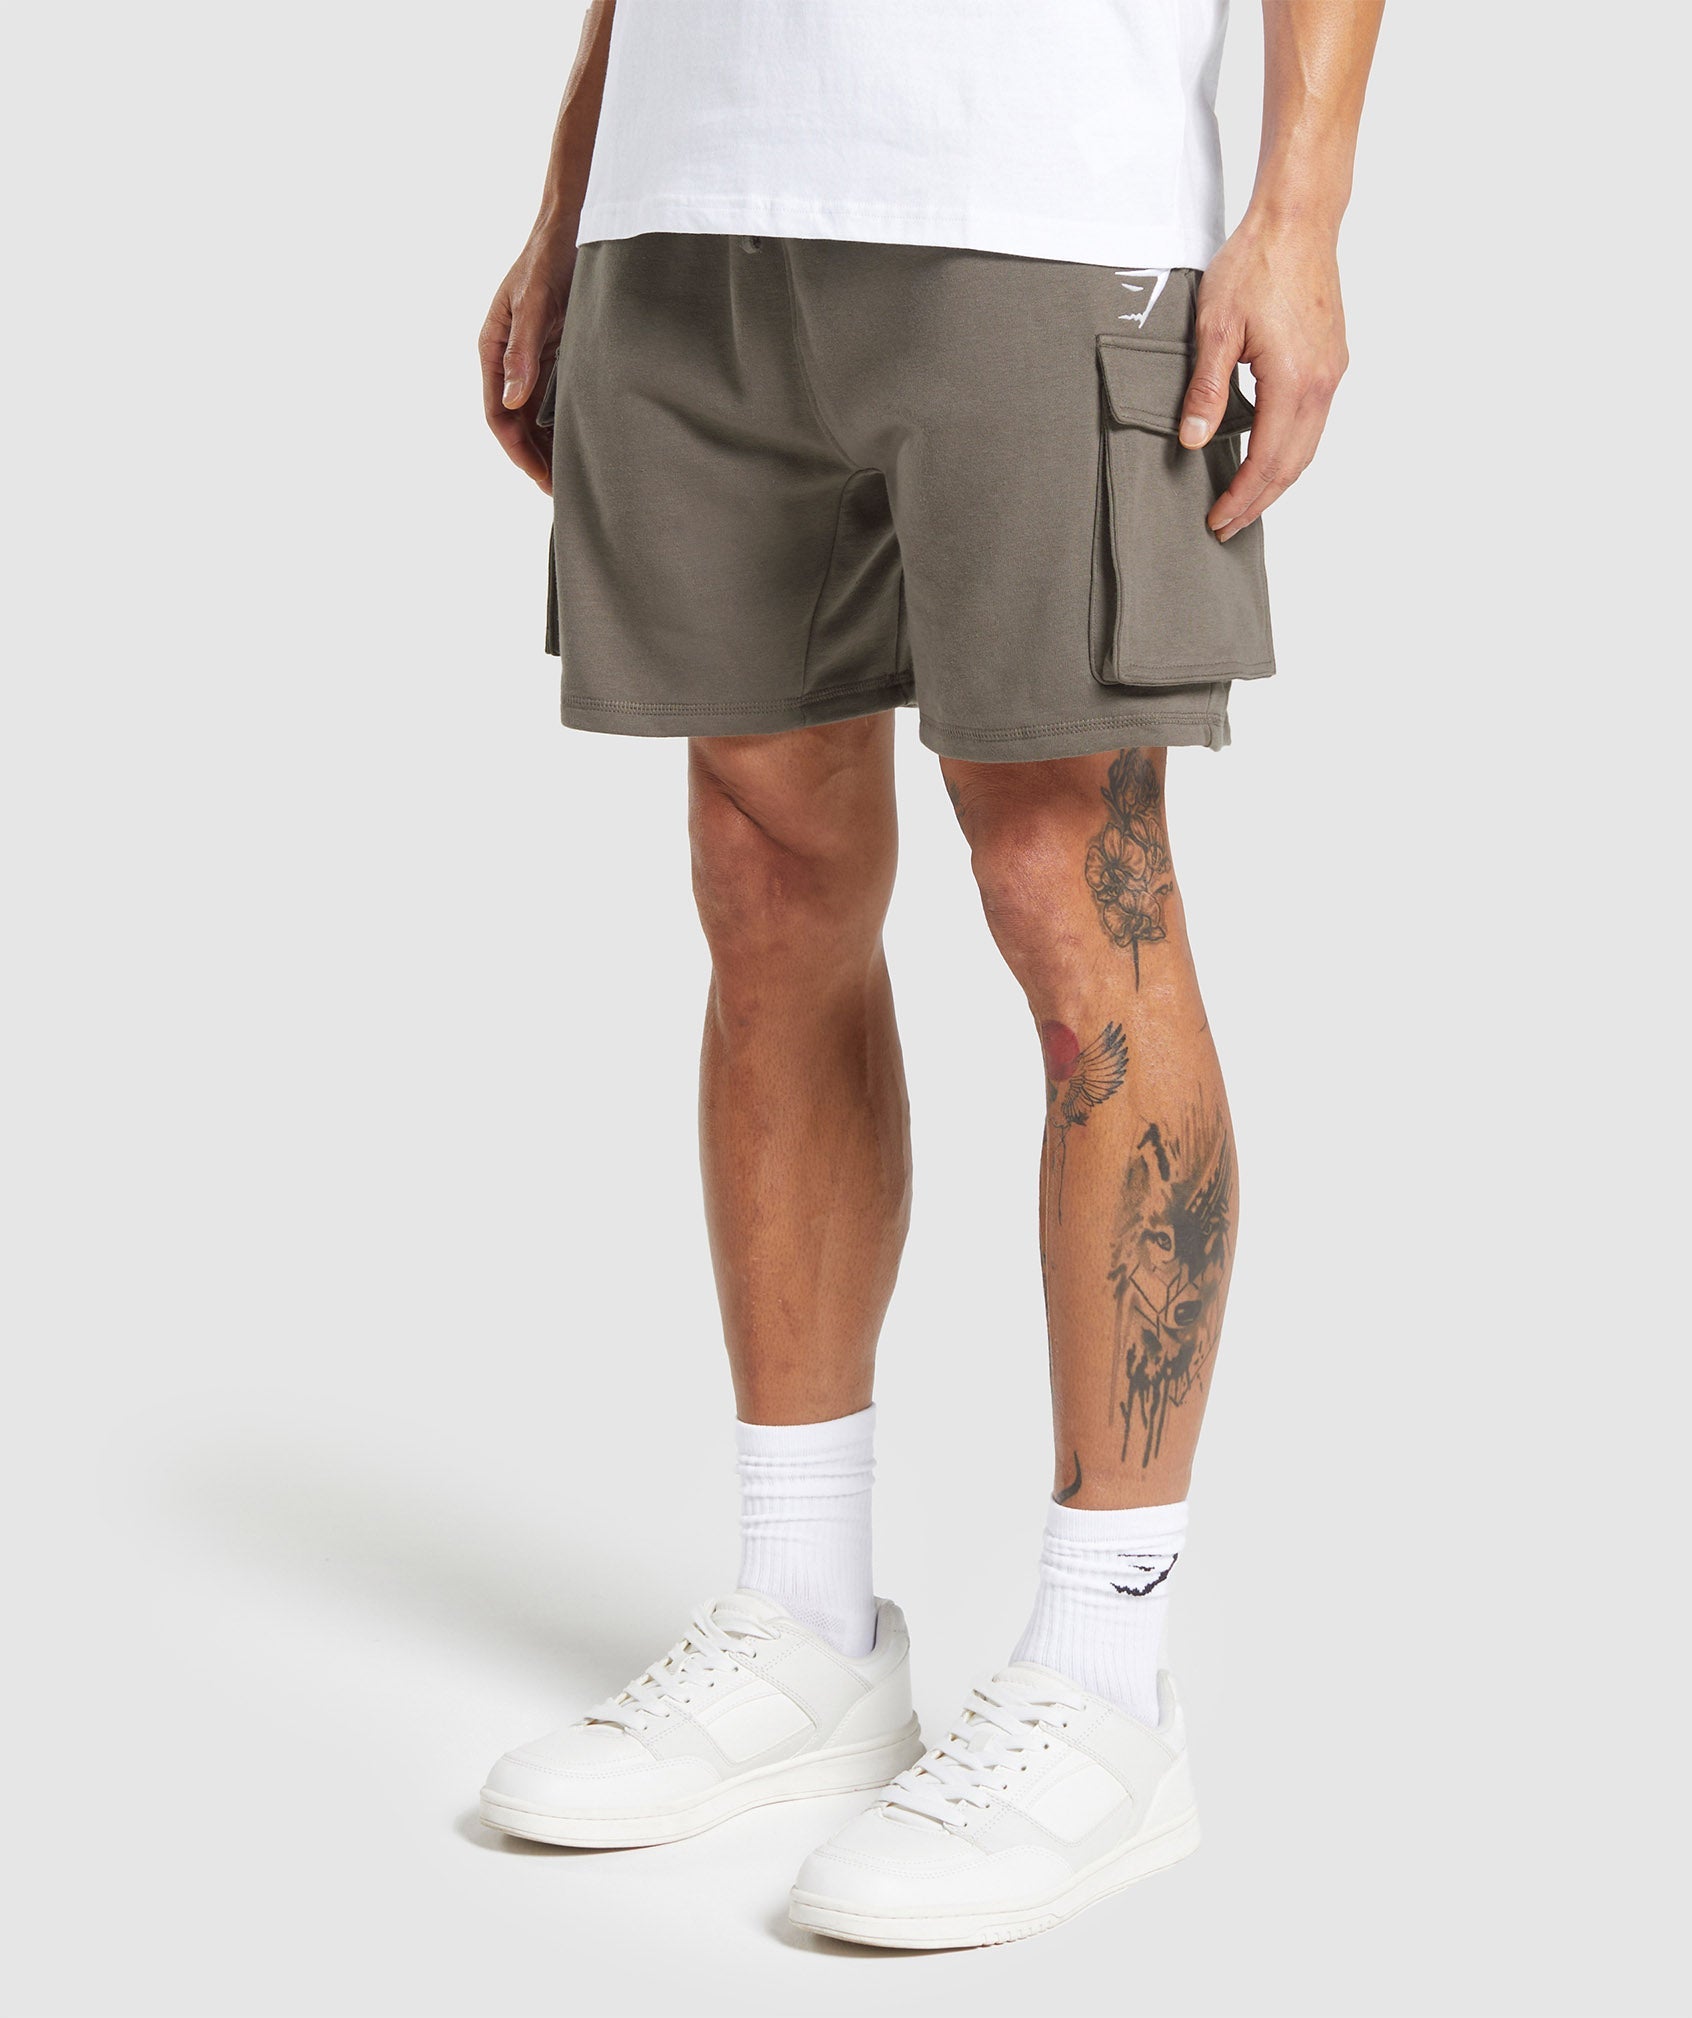 Gymshark Crest Cargo Shorts - Camo Brown | Gymshark